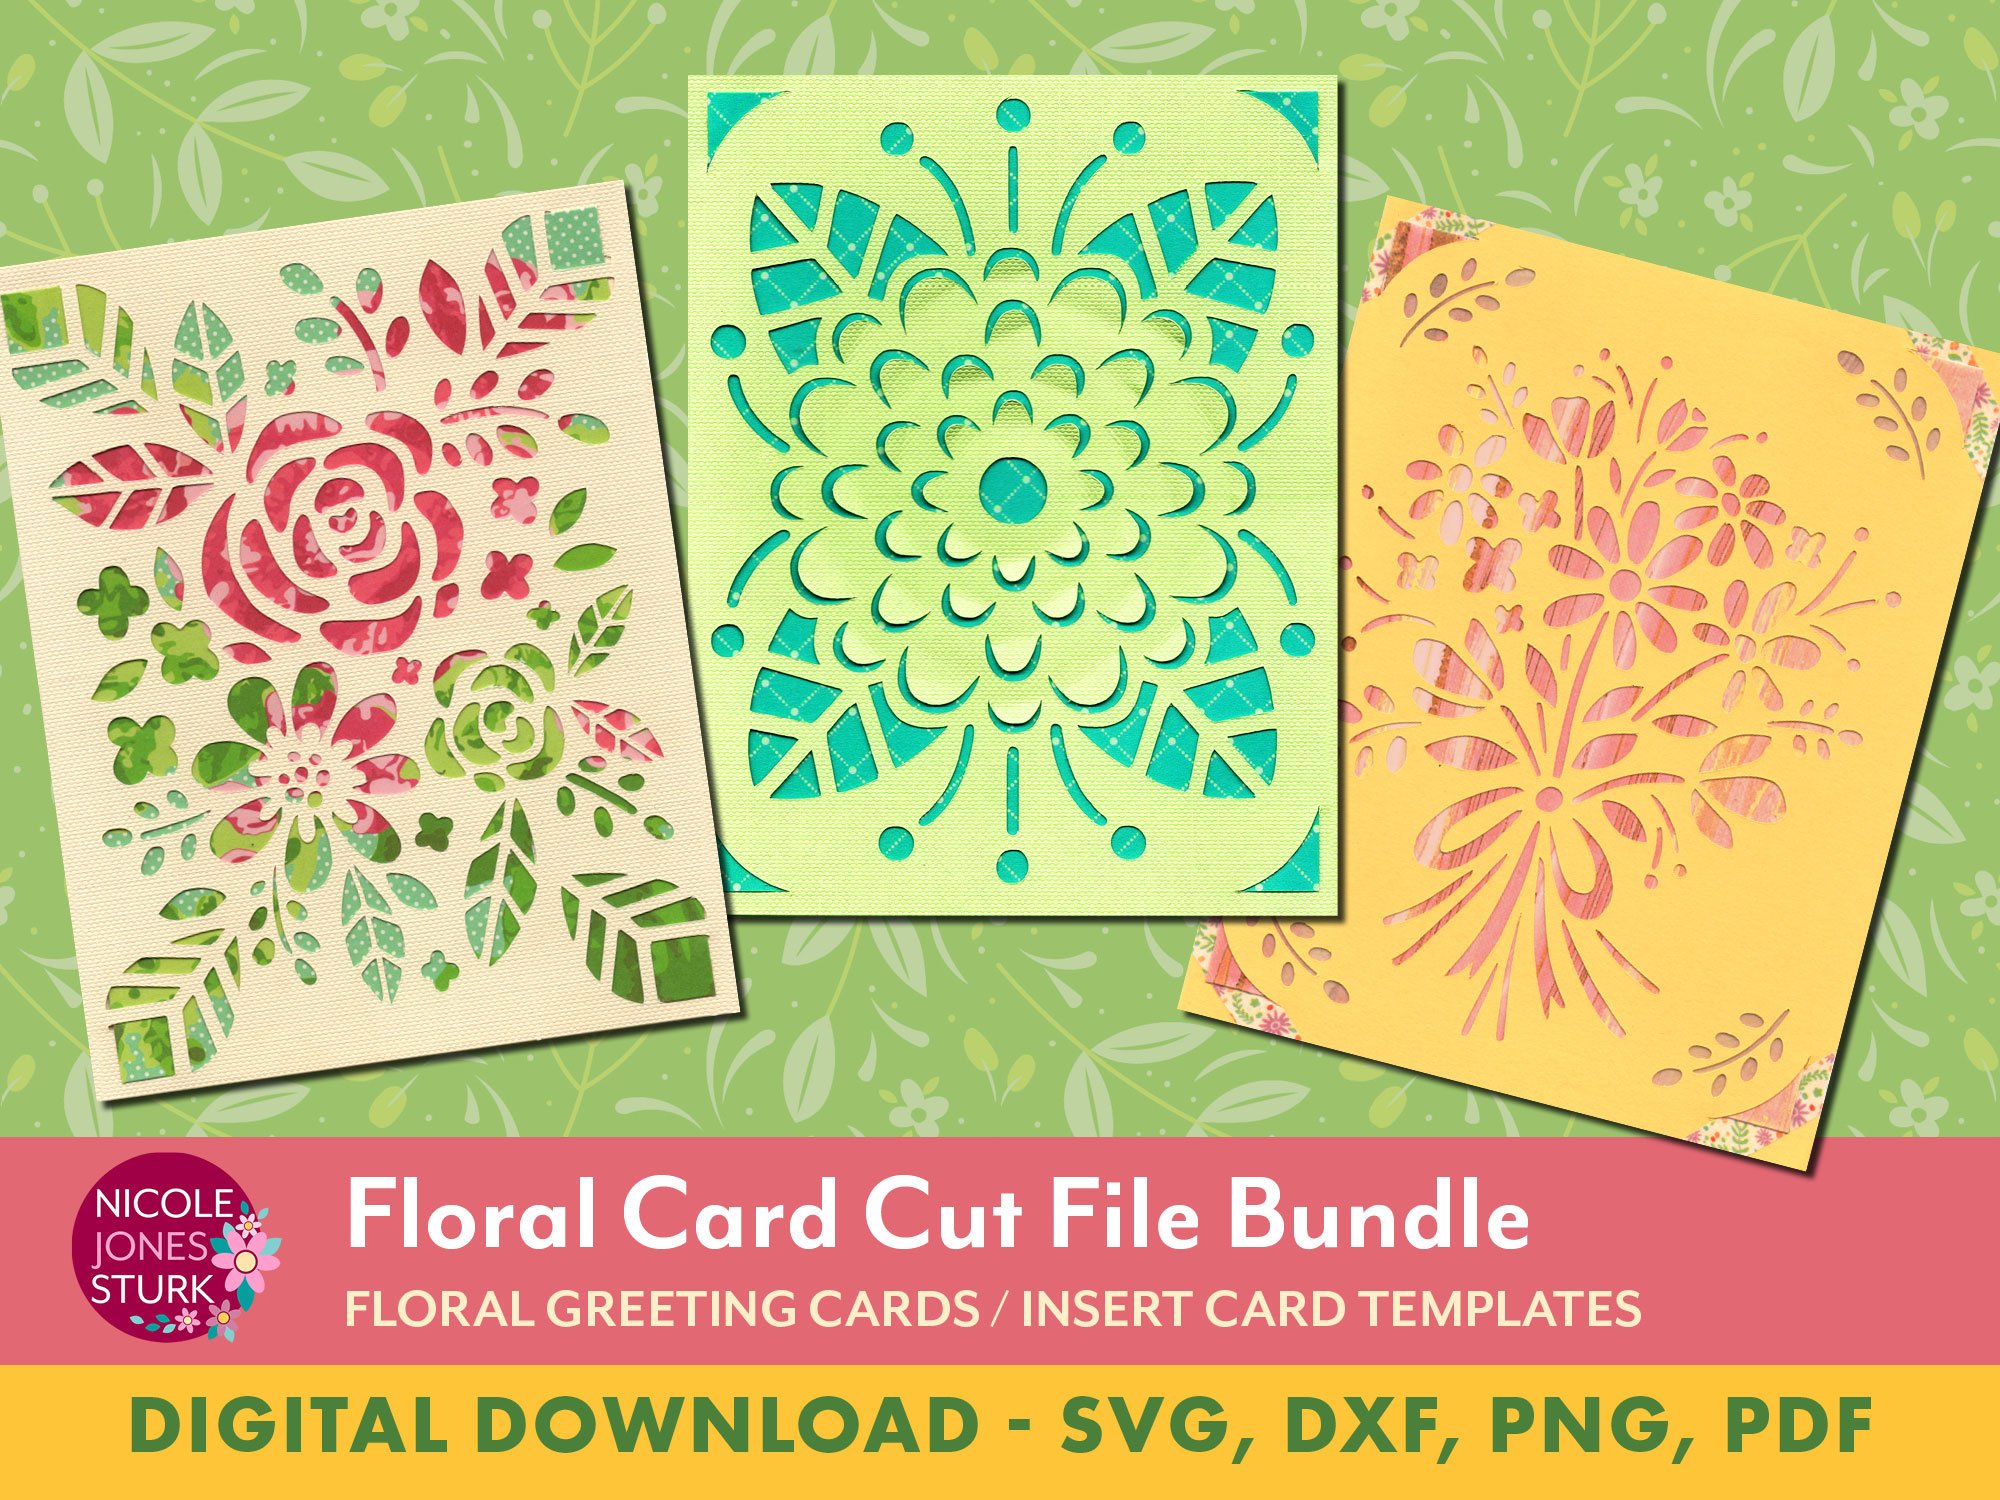 njs-cut-floral-insert-cards-listing1.jpg